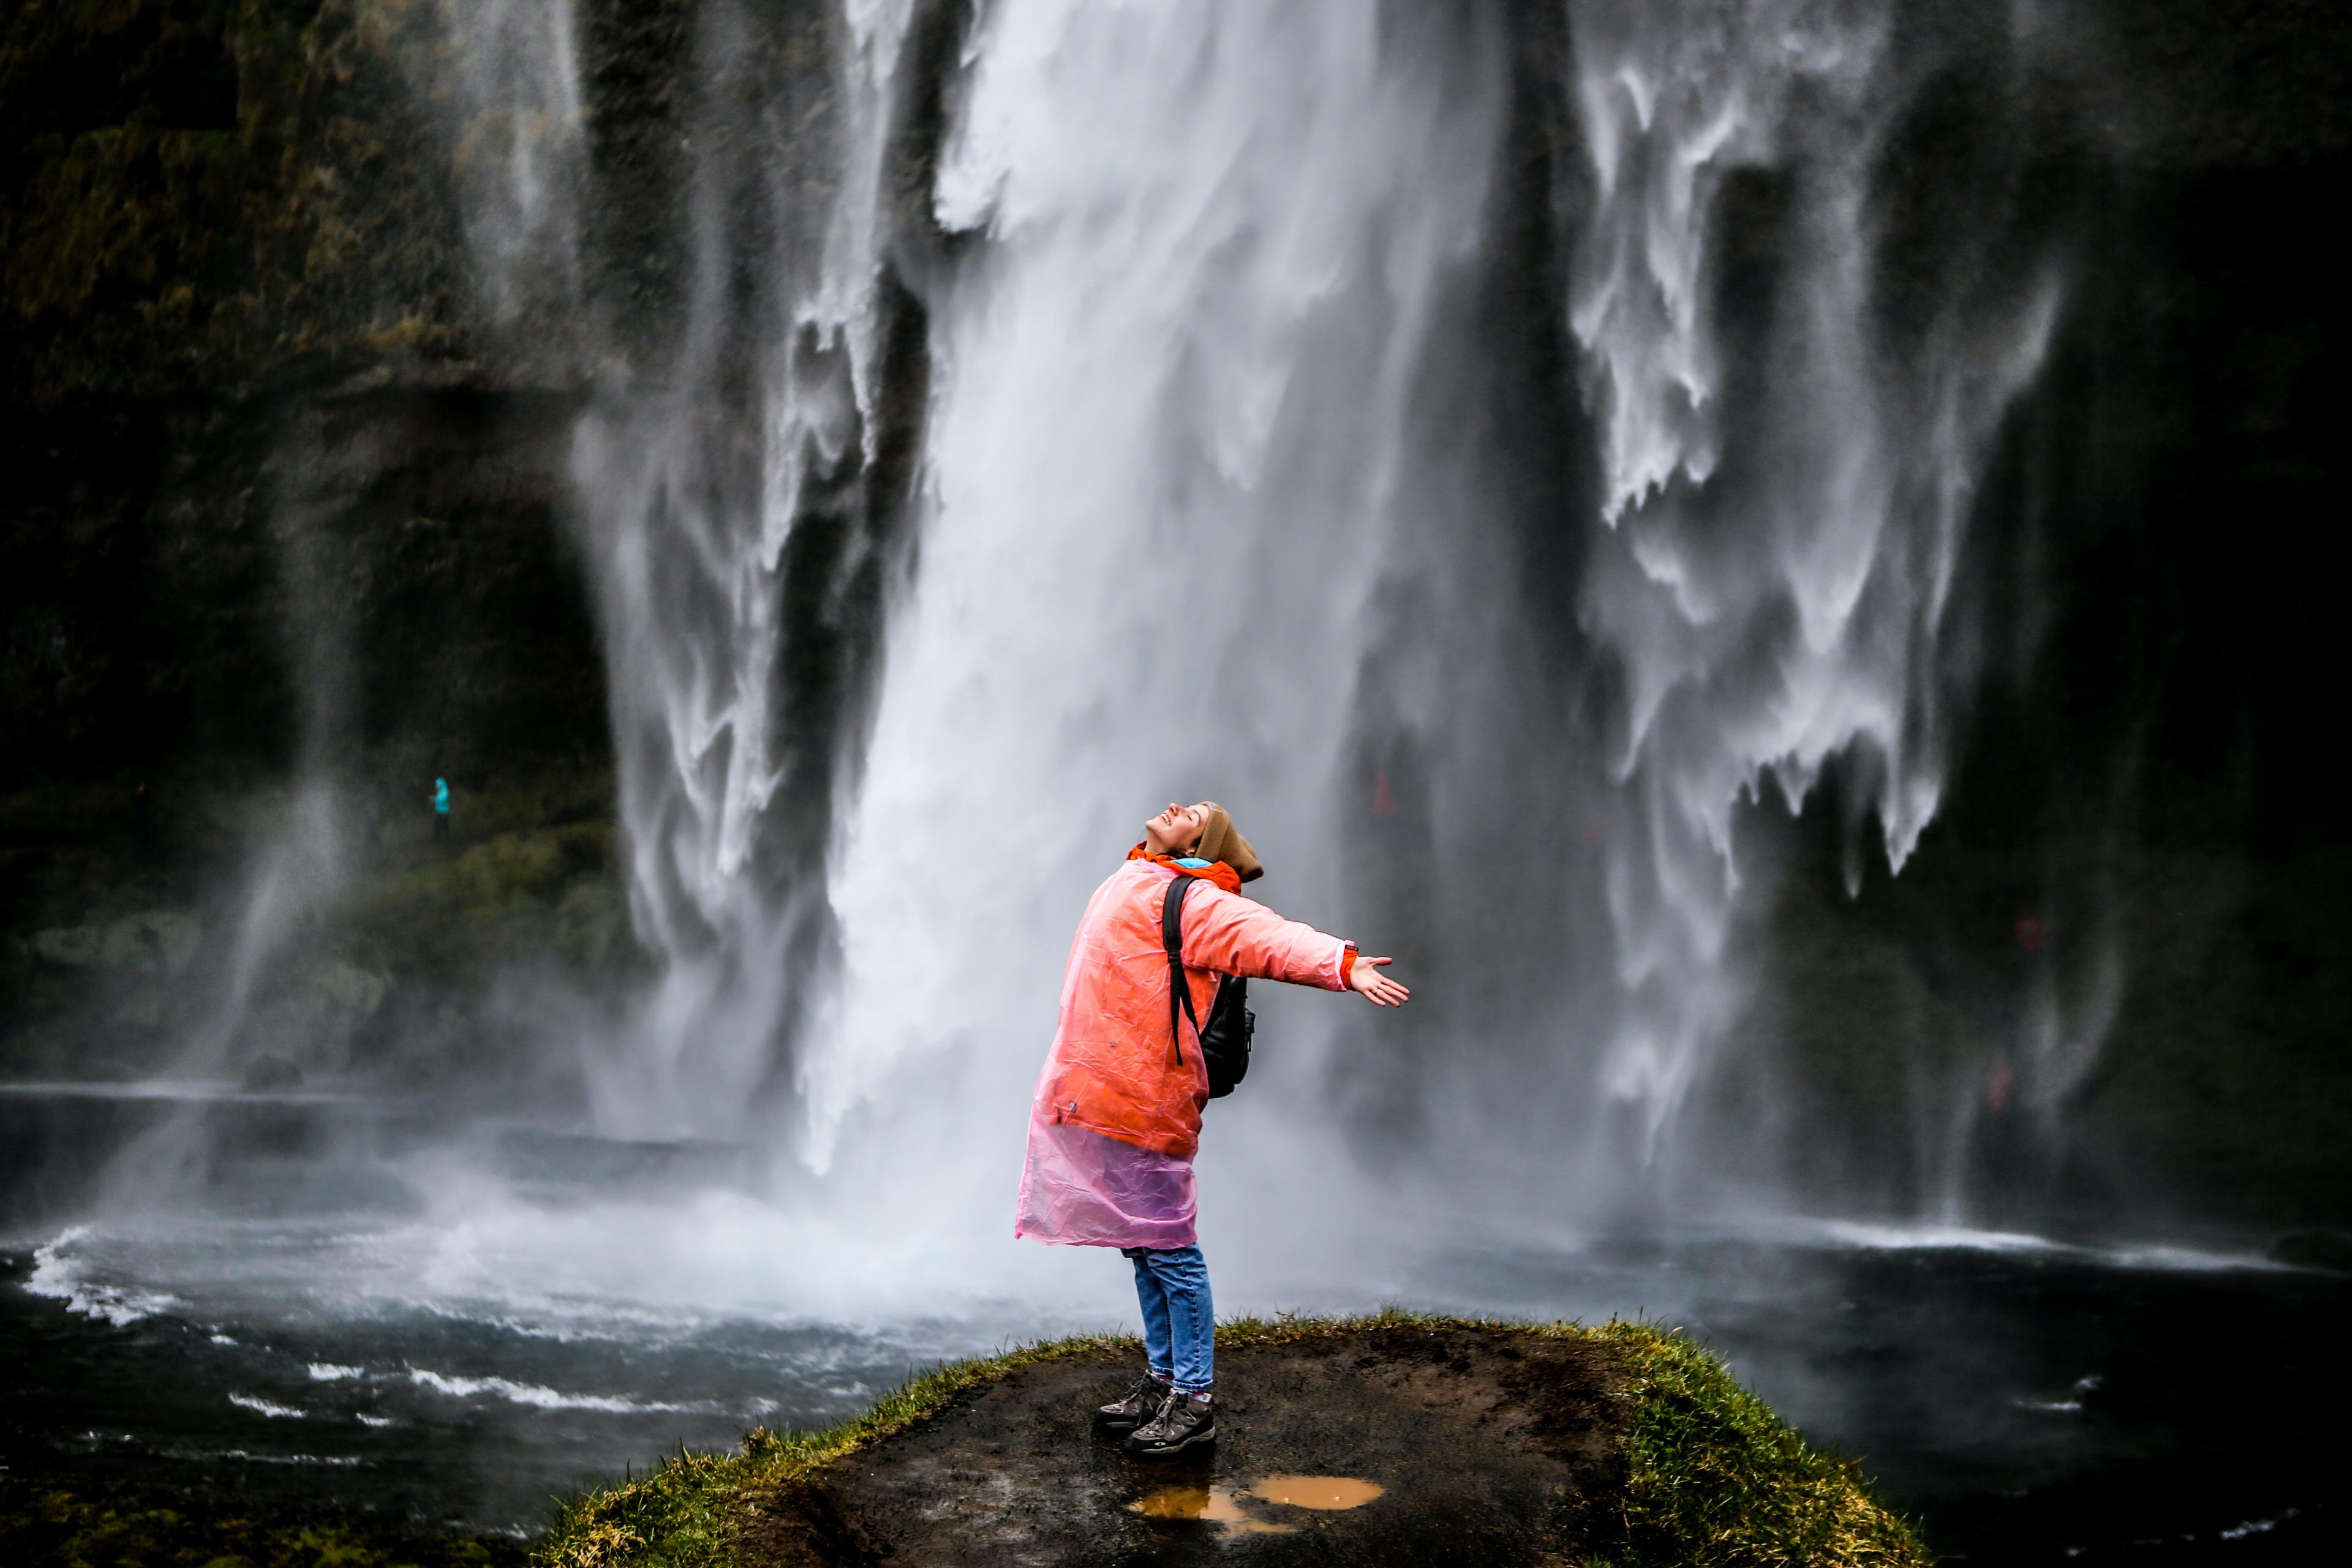 A joyful traveler reveling in the refreshing mist from the majestic Seljalandsfoss waterfall.